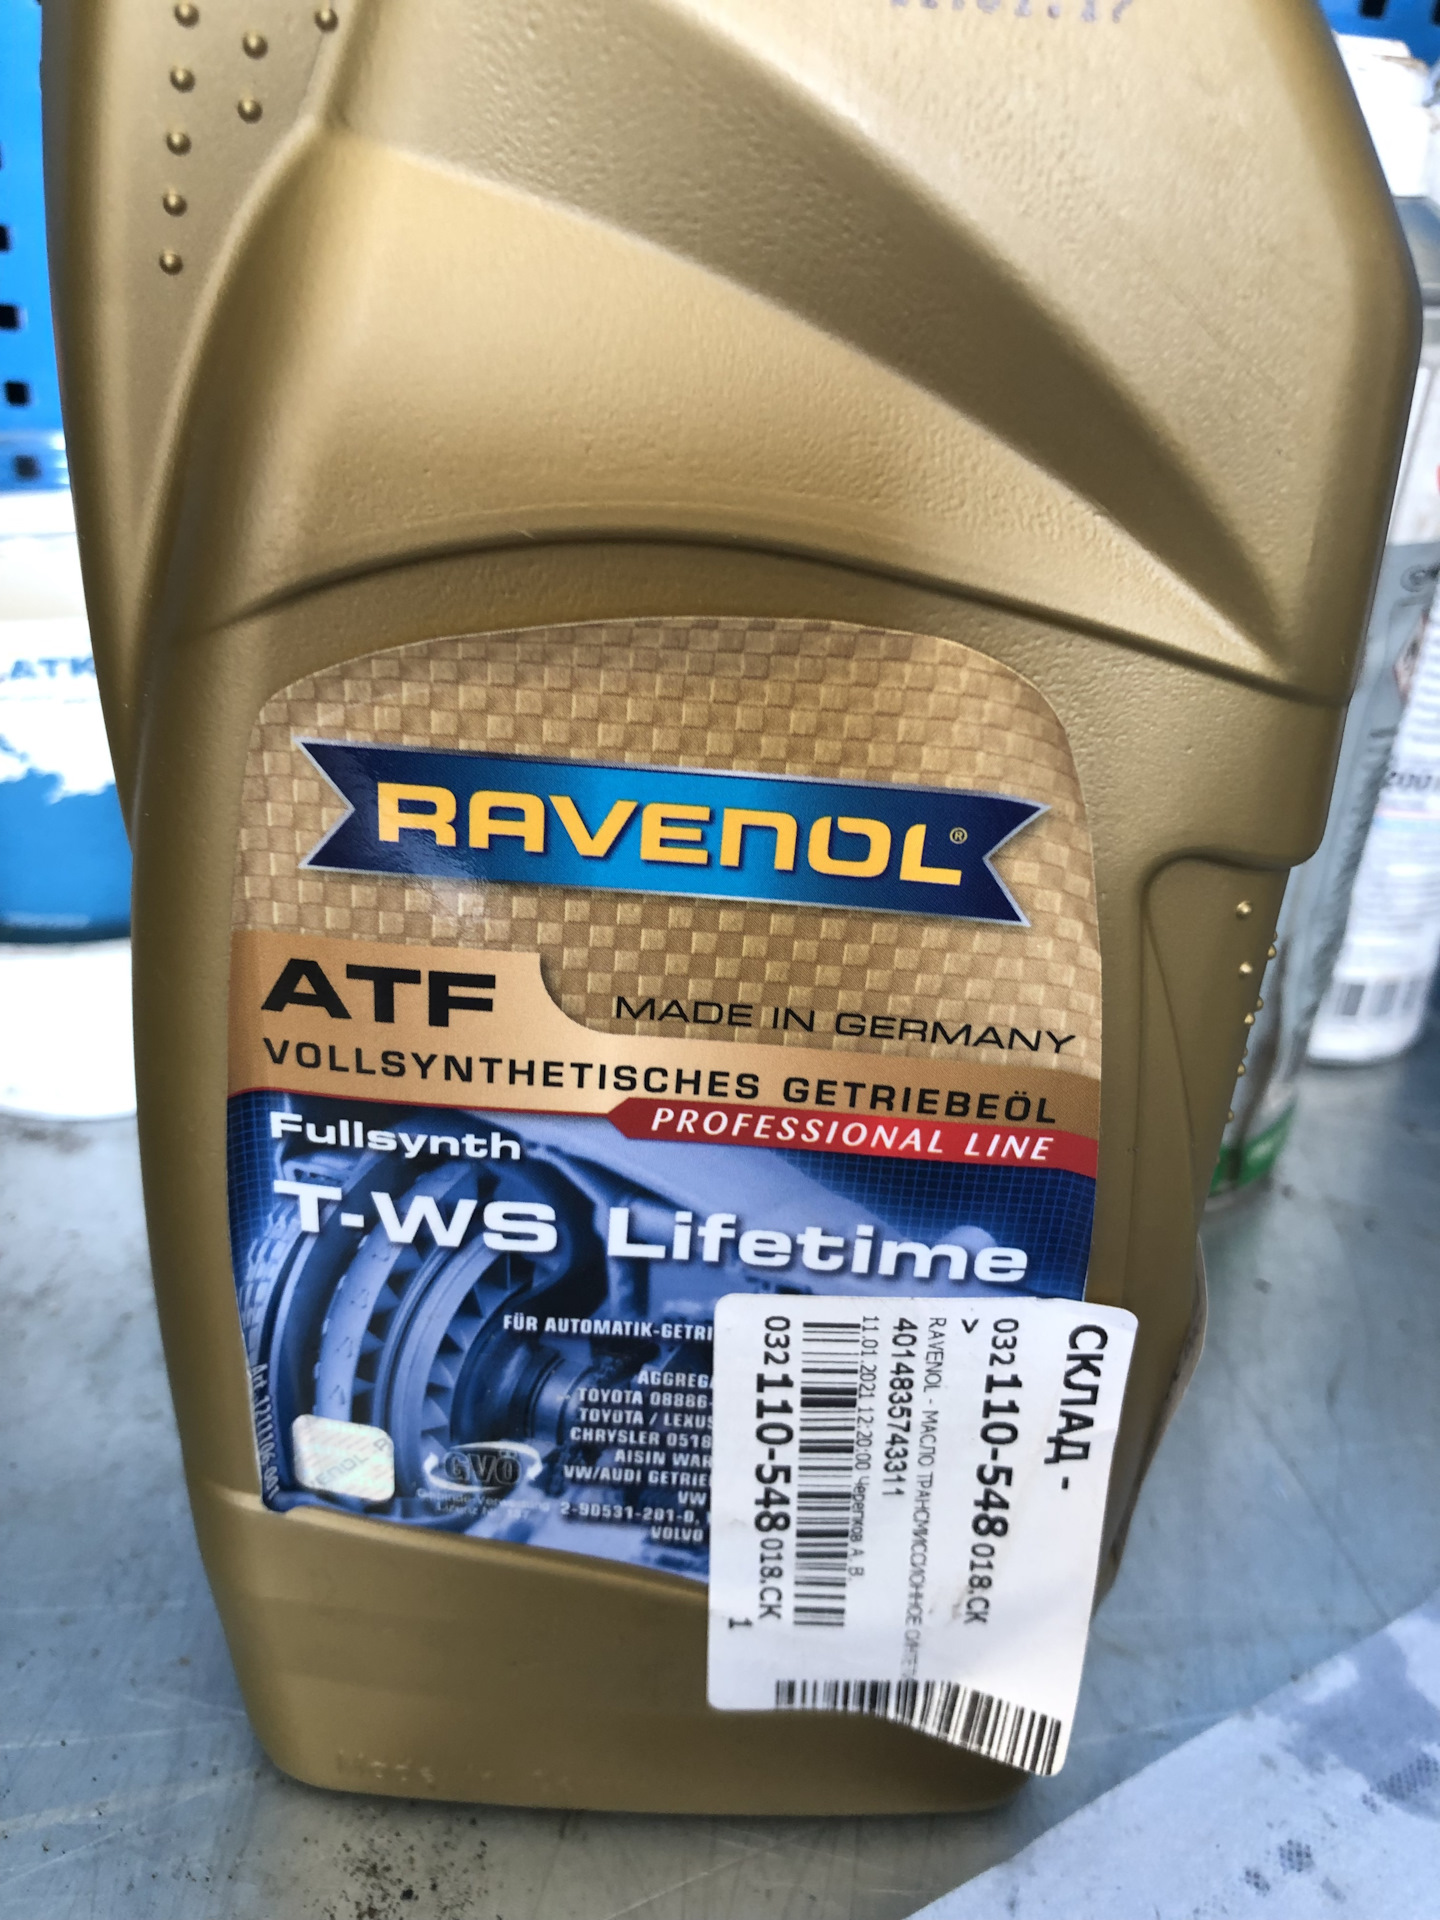 Atf t ws lifetime. Ravenol ATF T-WS Lifetime. Масло в коробке Равенол цвет. Замена масла в АКПП Порше Кайен. Ravenol ATF TVS Lifetime в Кемерово цена.